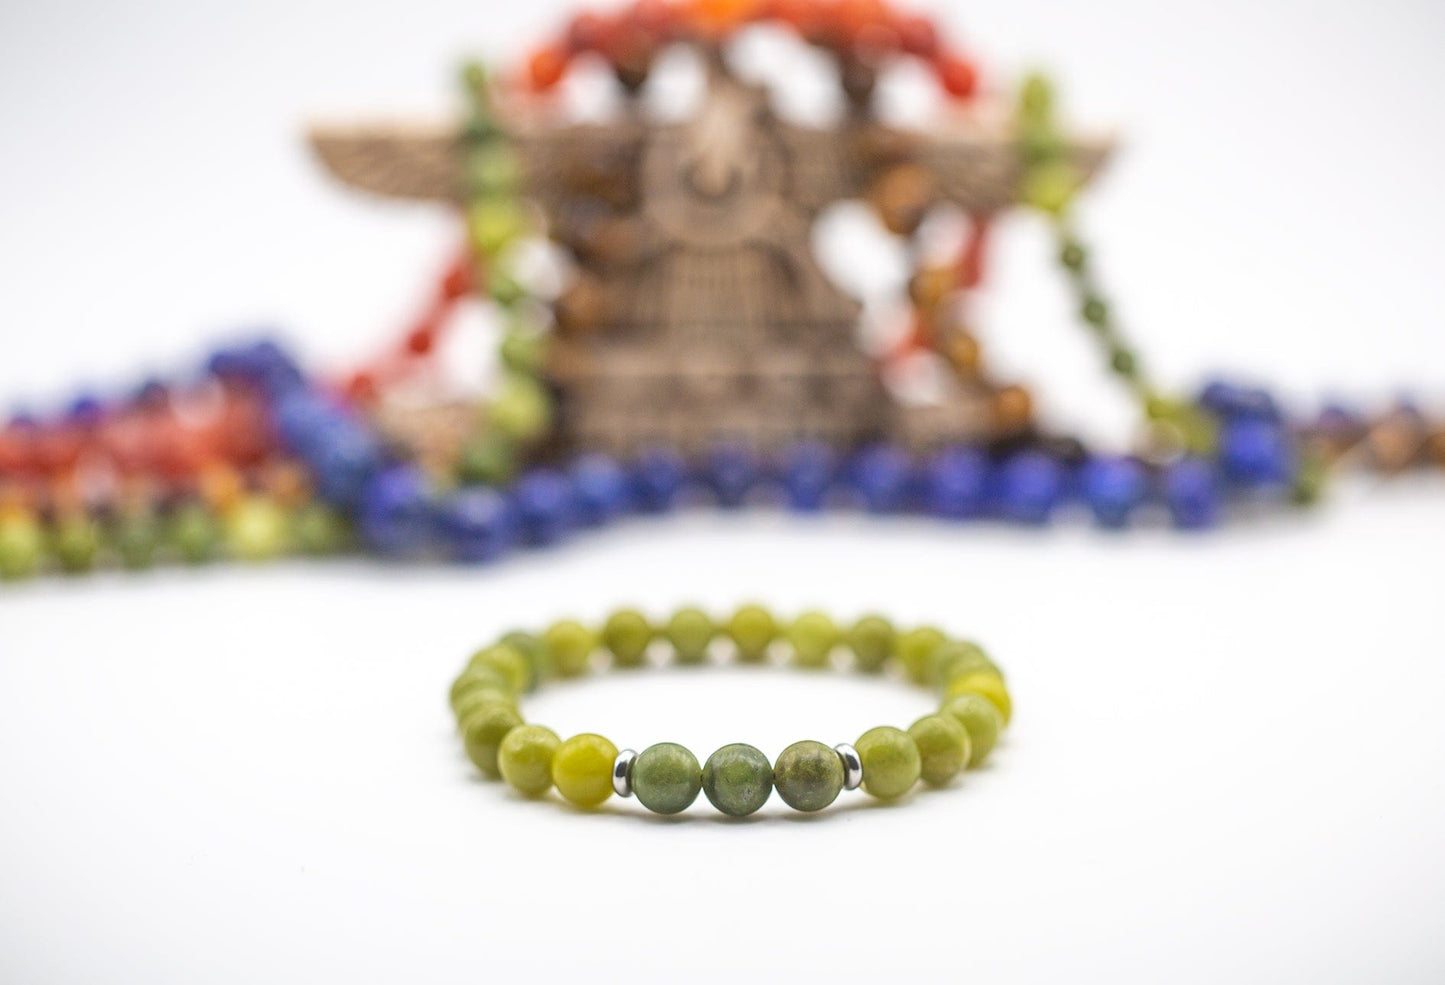 Ashur Designs "Pakal" Natural Jade bracelet in 8mm 